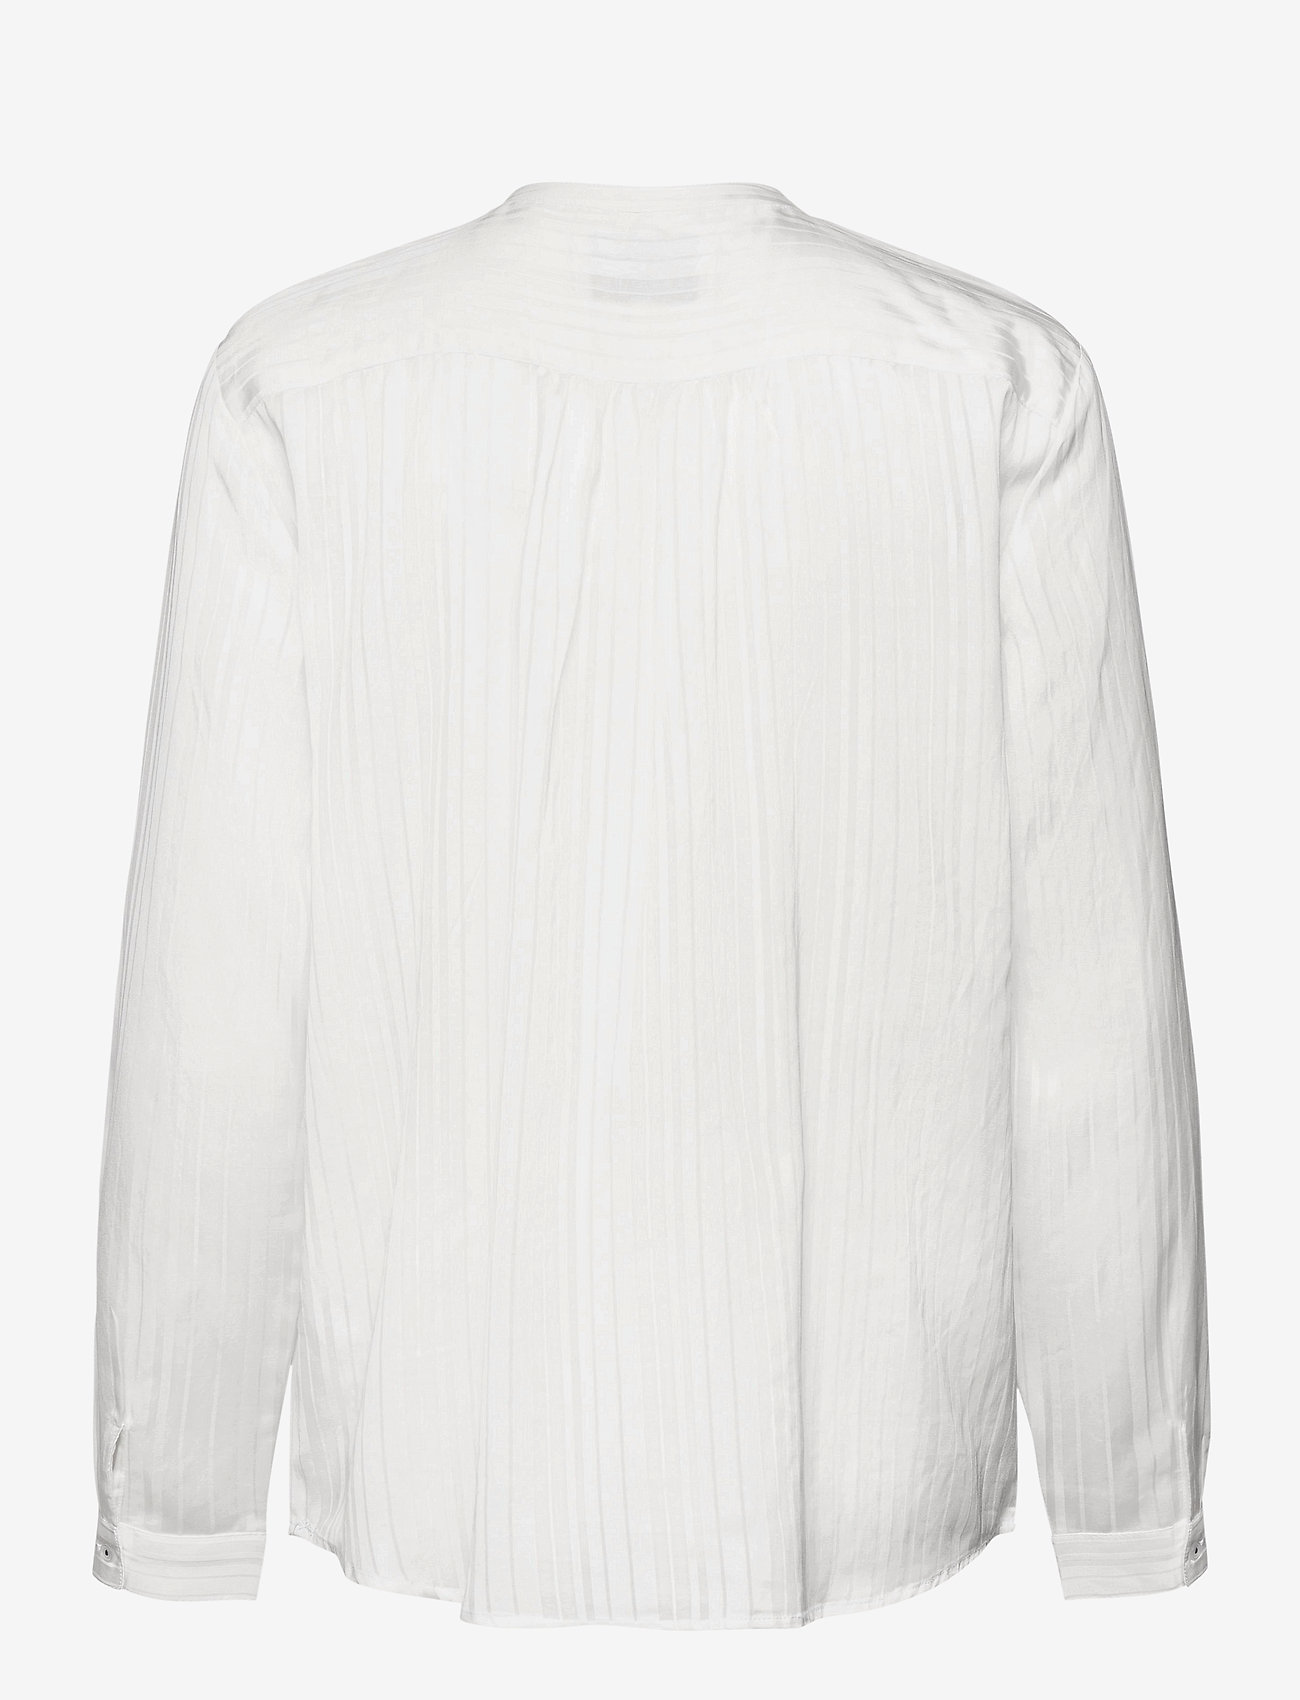 Lollys Laundry - Lux Shirt - långärmade blusar - white - 1